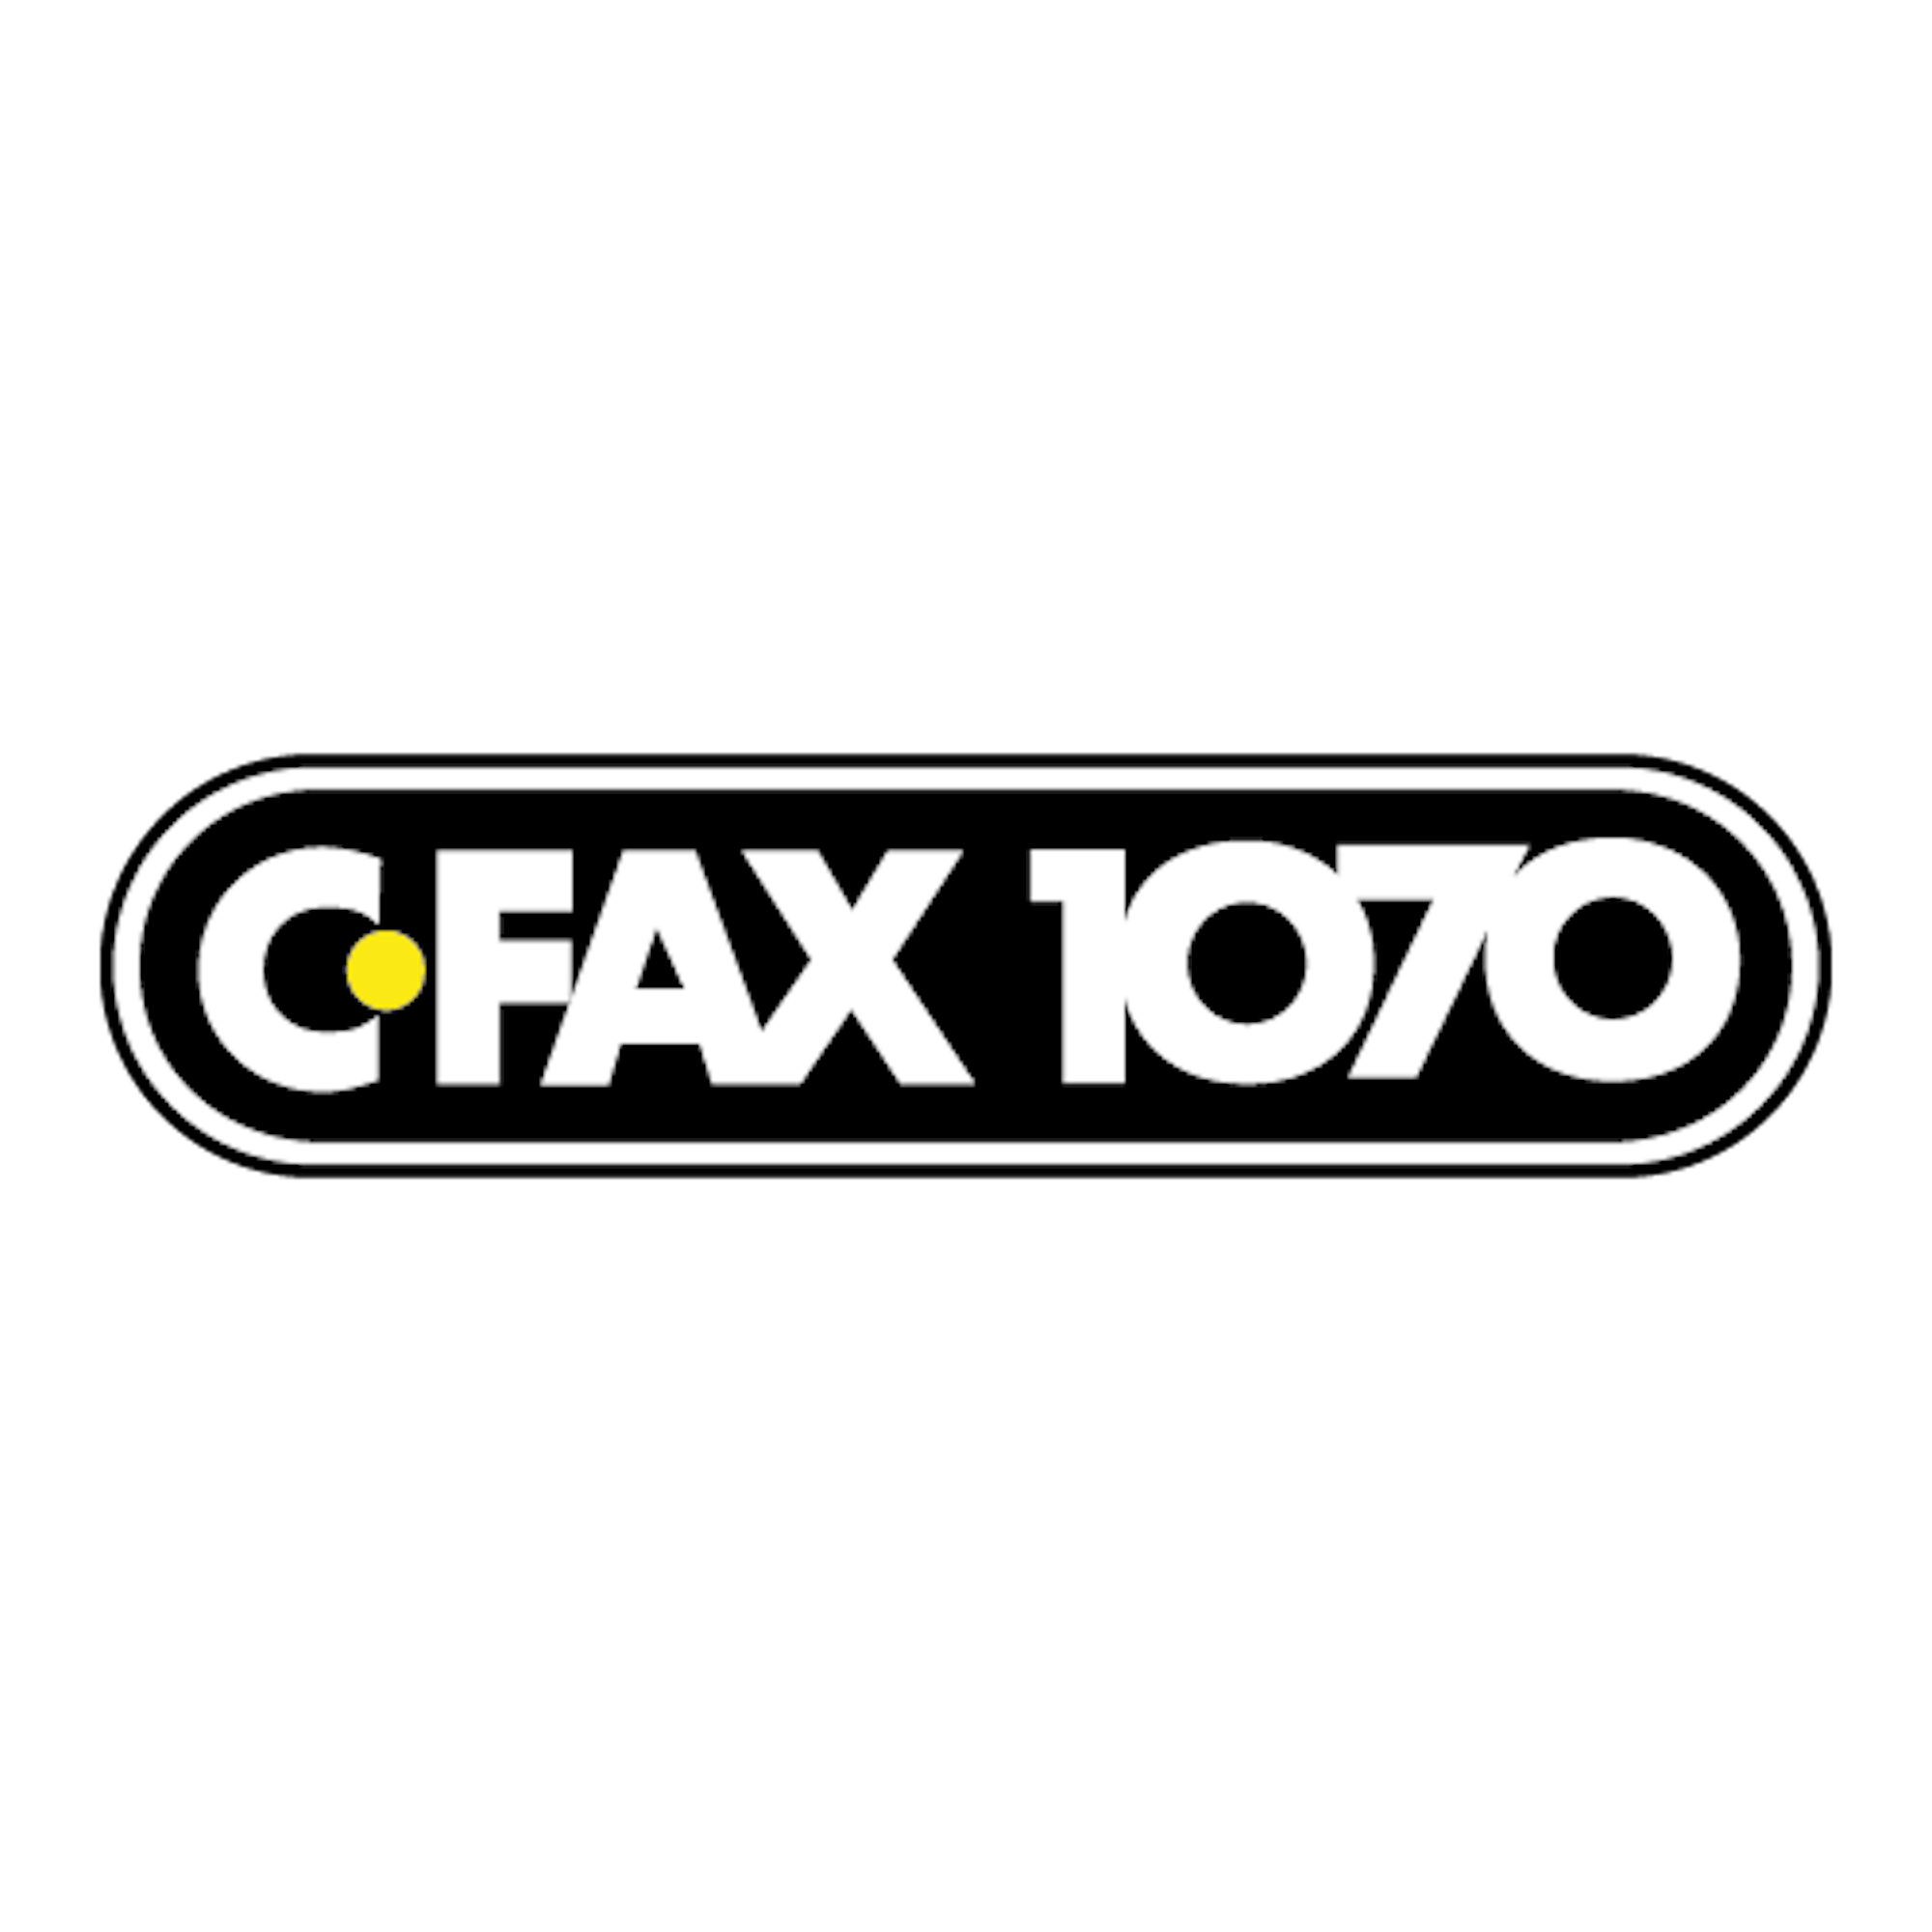 CFAX logo